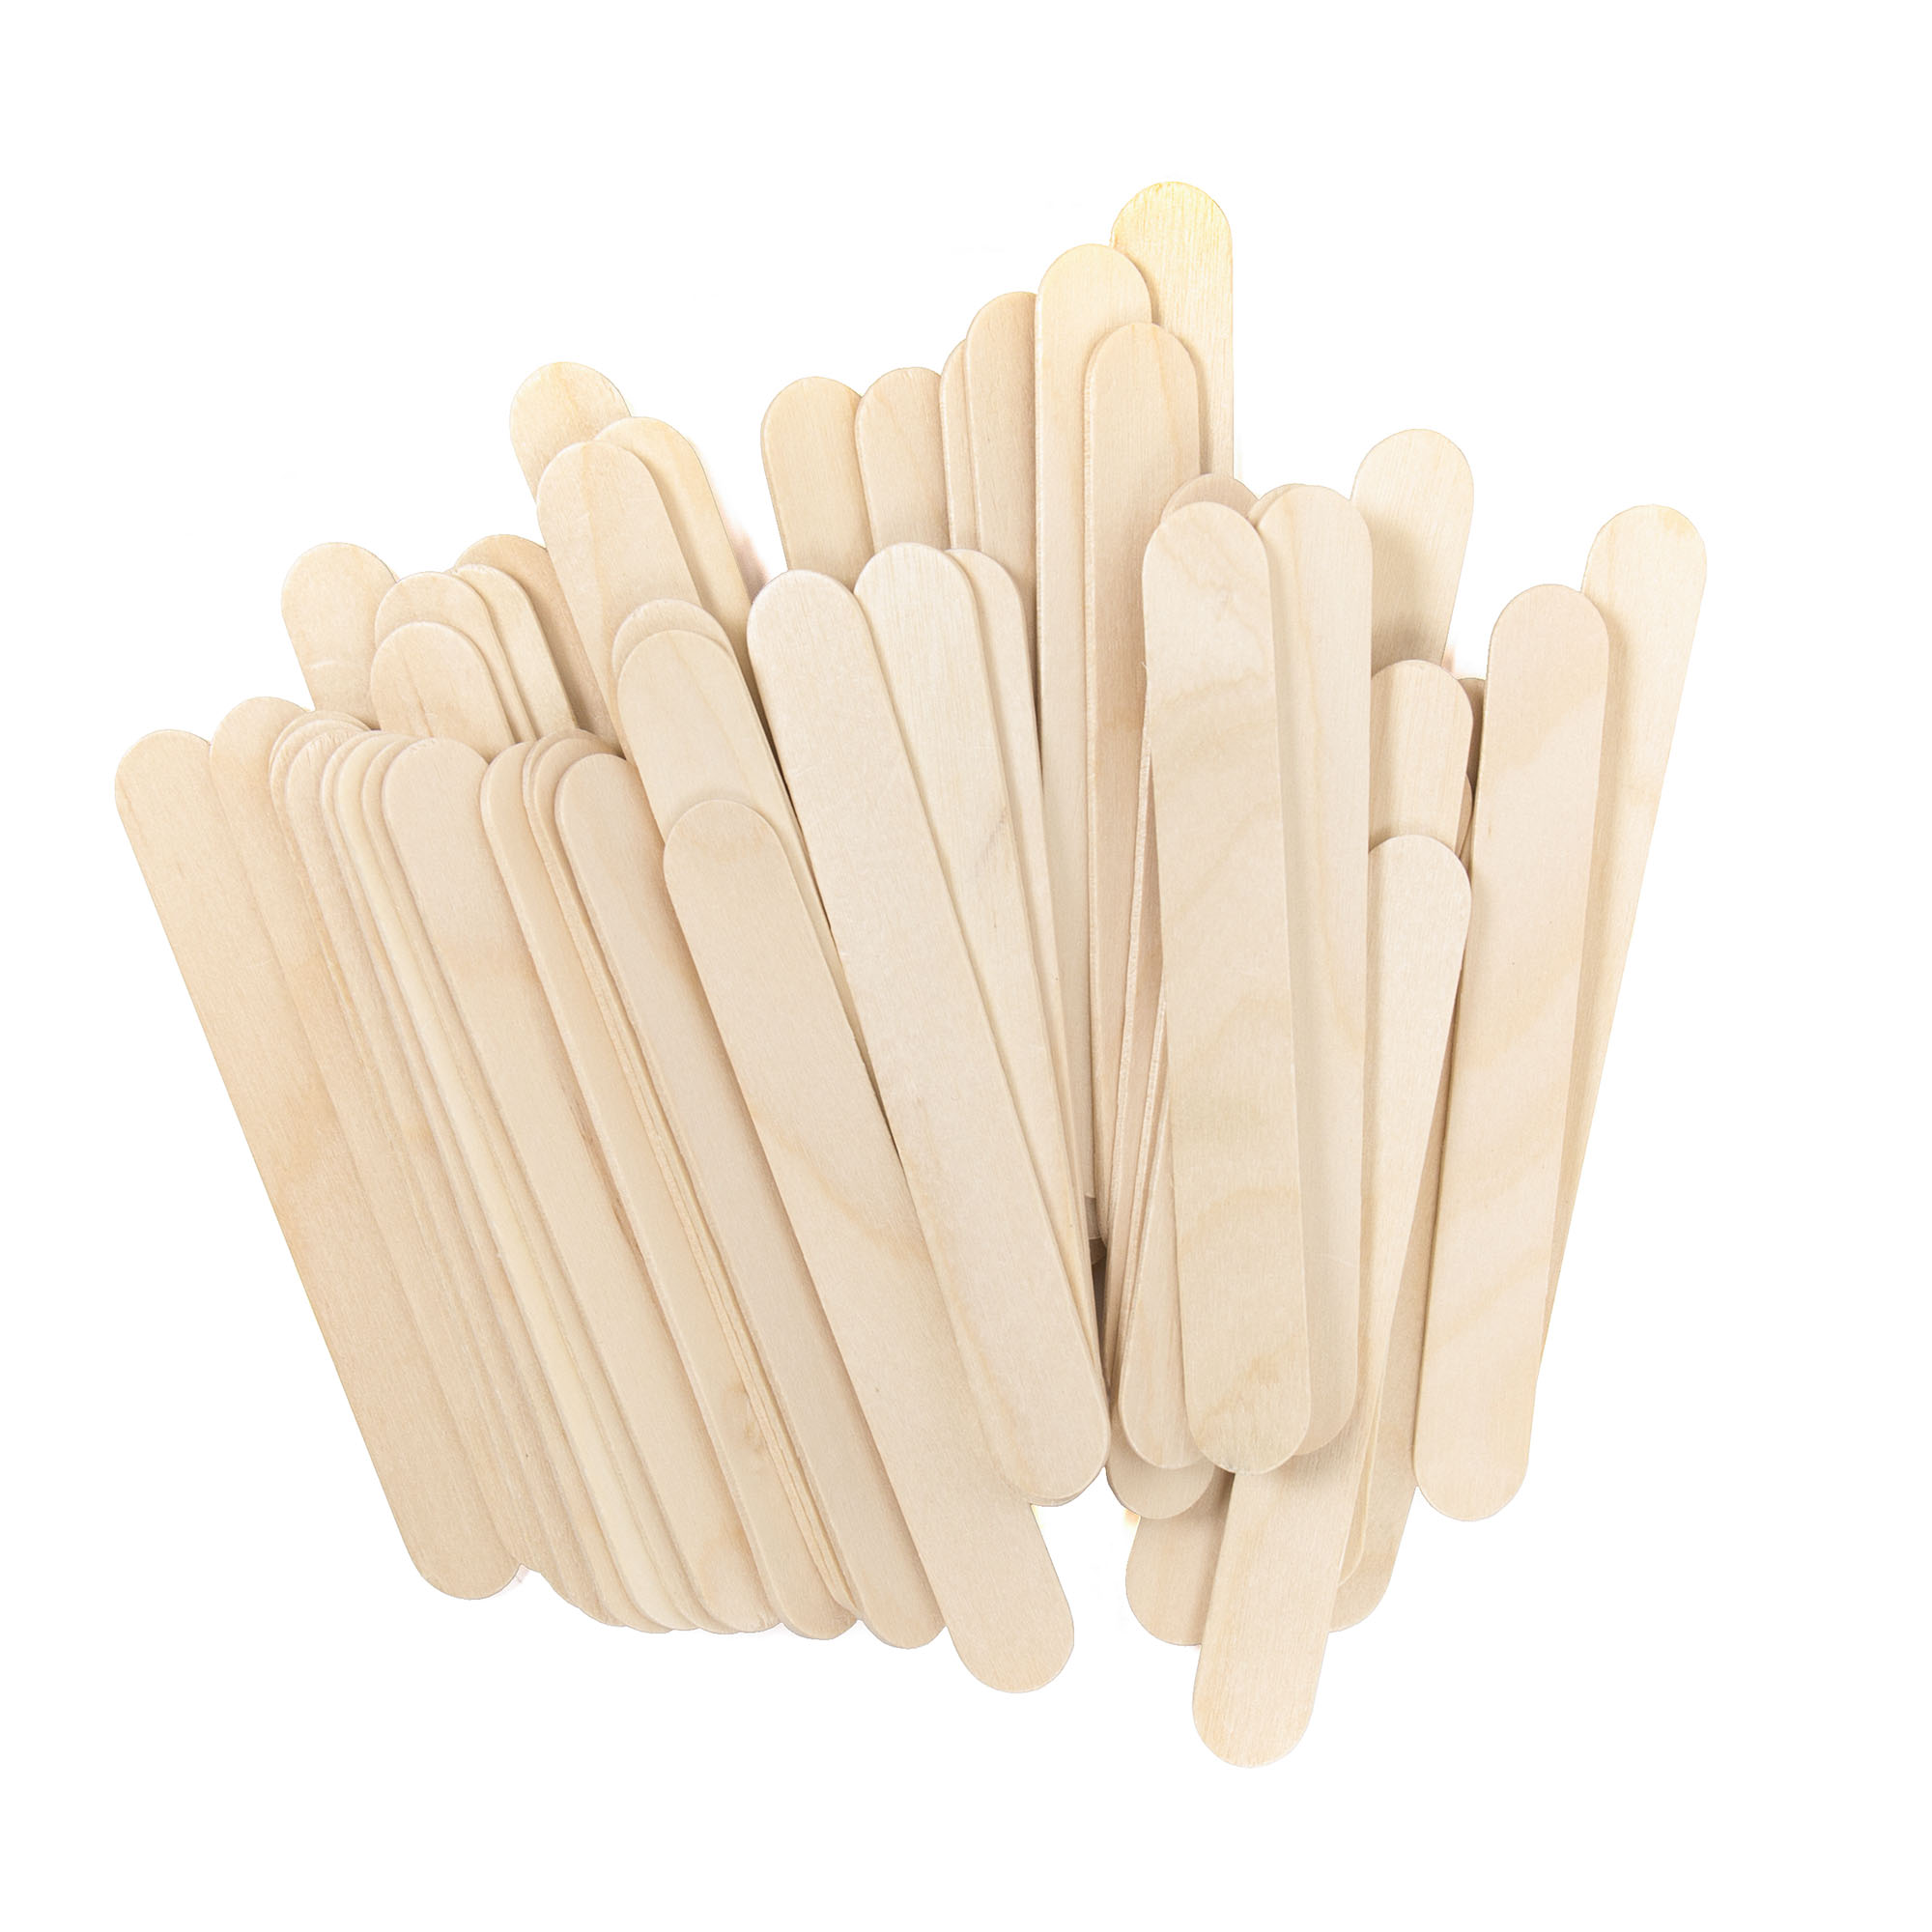 Go Create Small Wood Beige Craft Sticks, 50-Pack